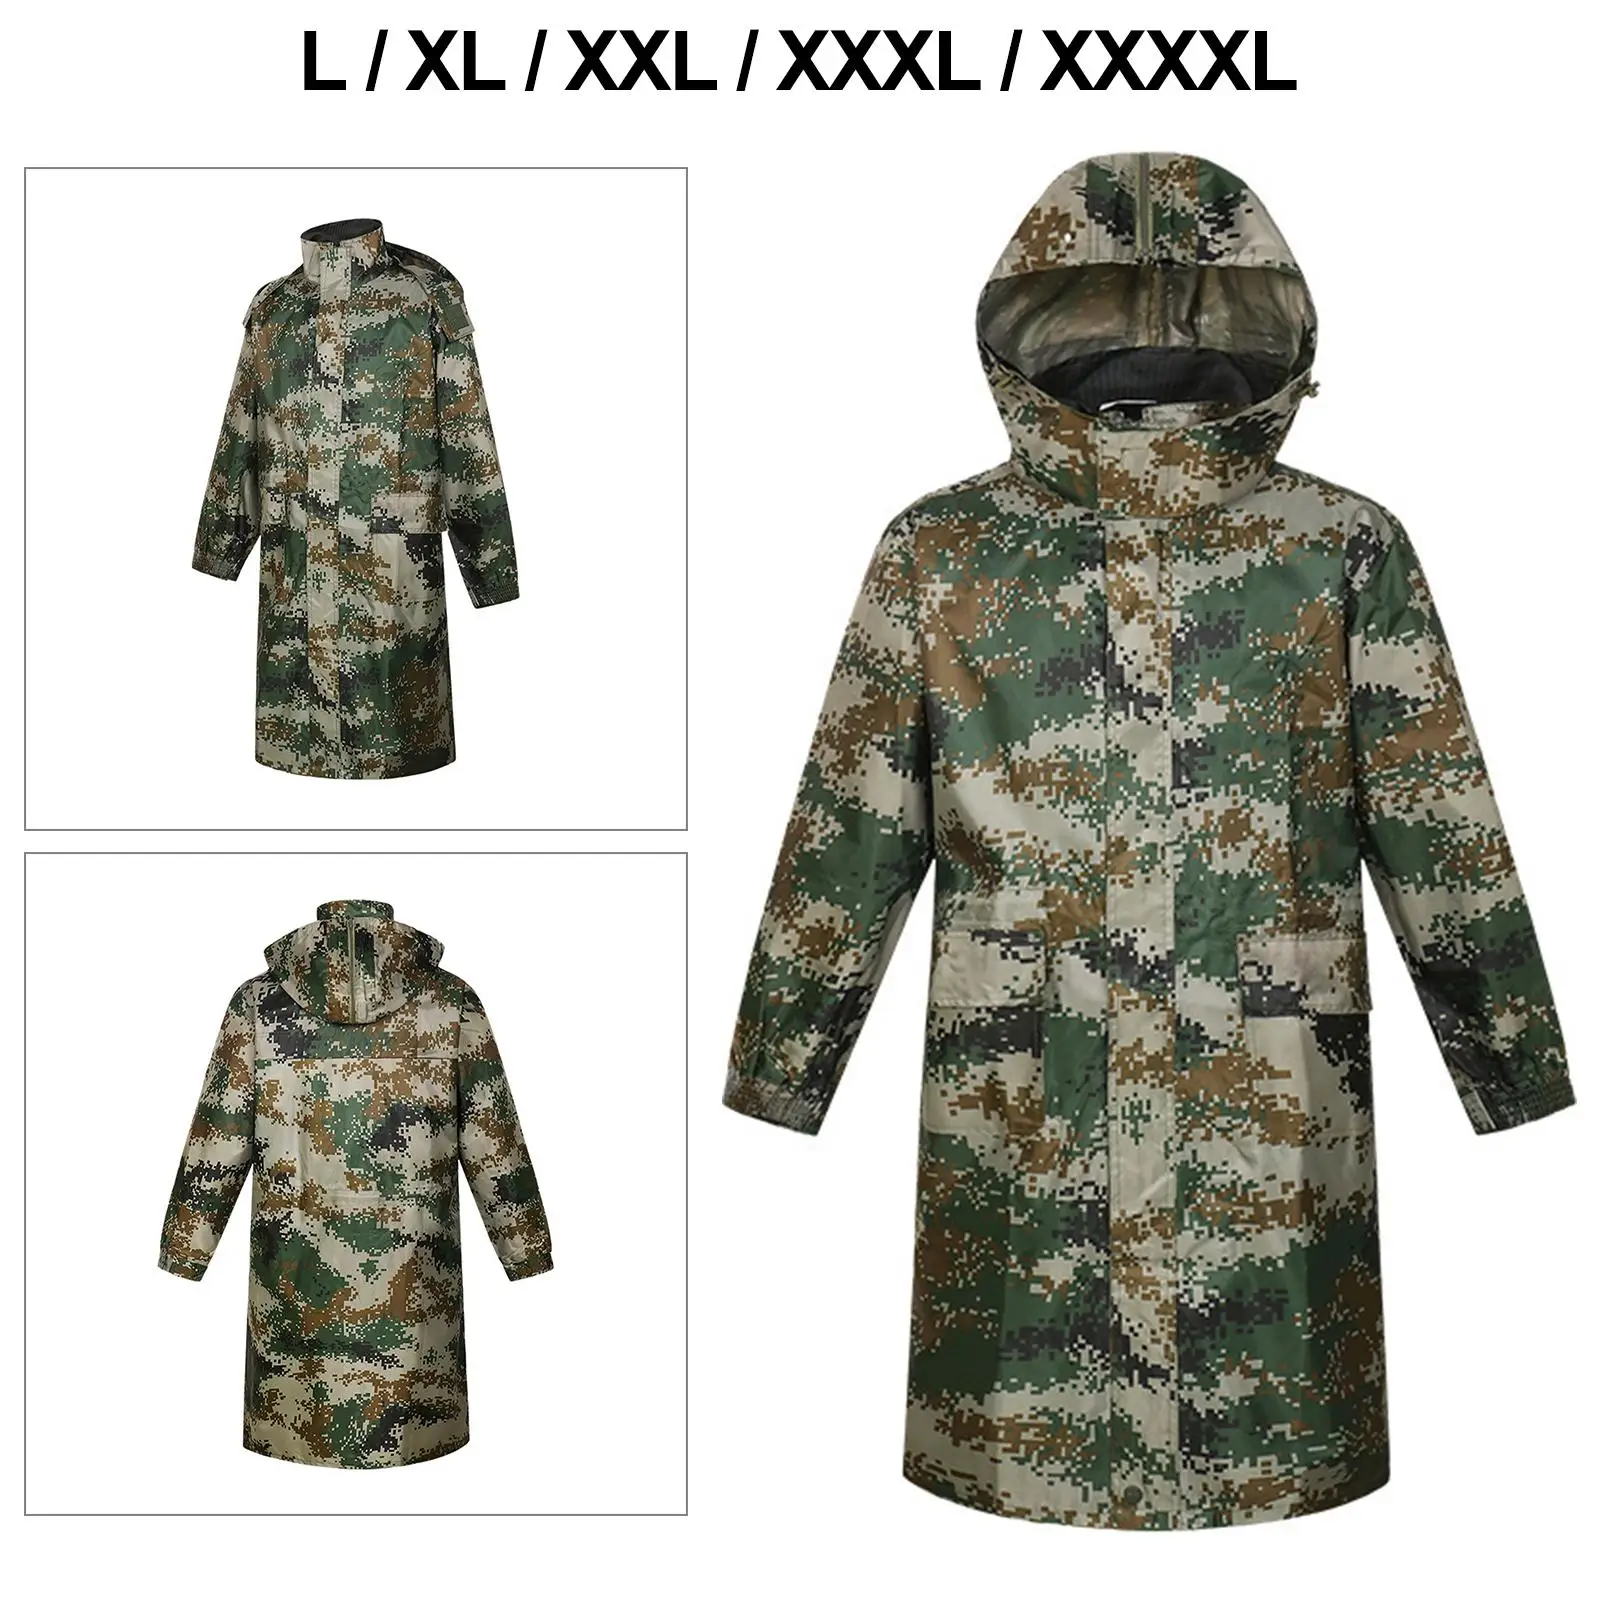 Raincoats with Hood Waterproof Camouflage Rain Jacket for Men Adults Fishing Hiking Travel